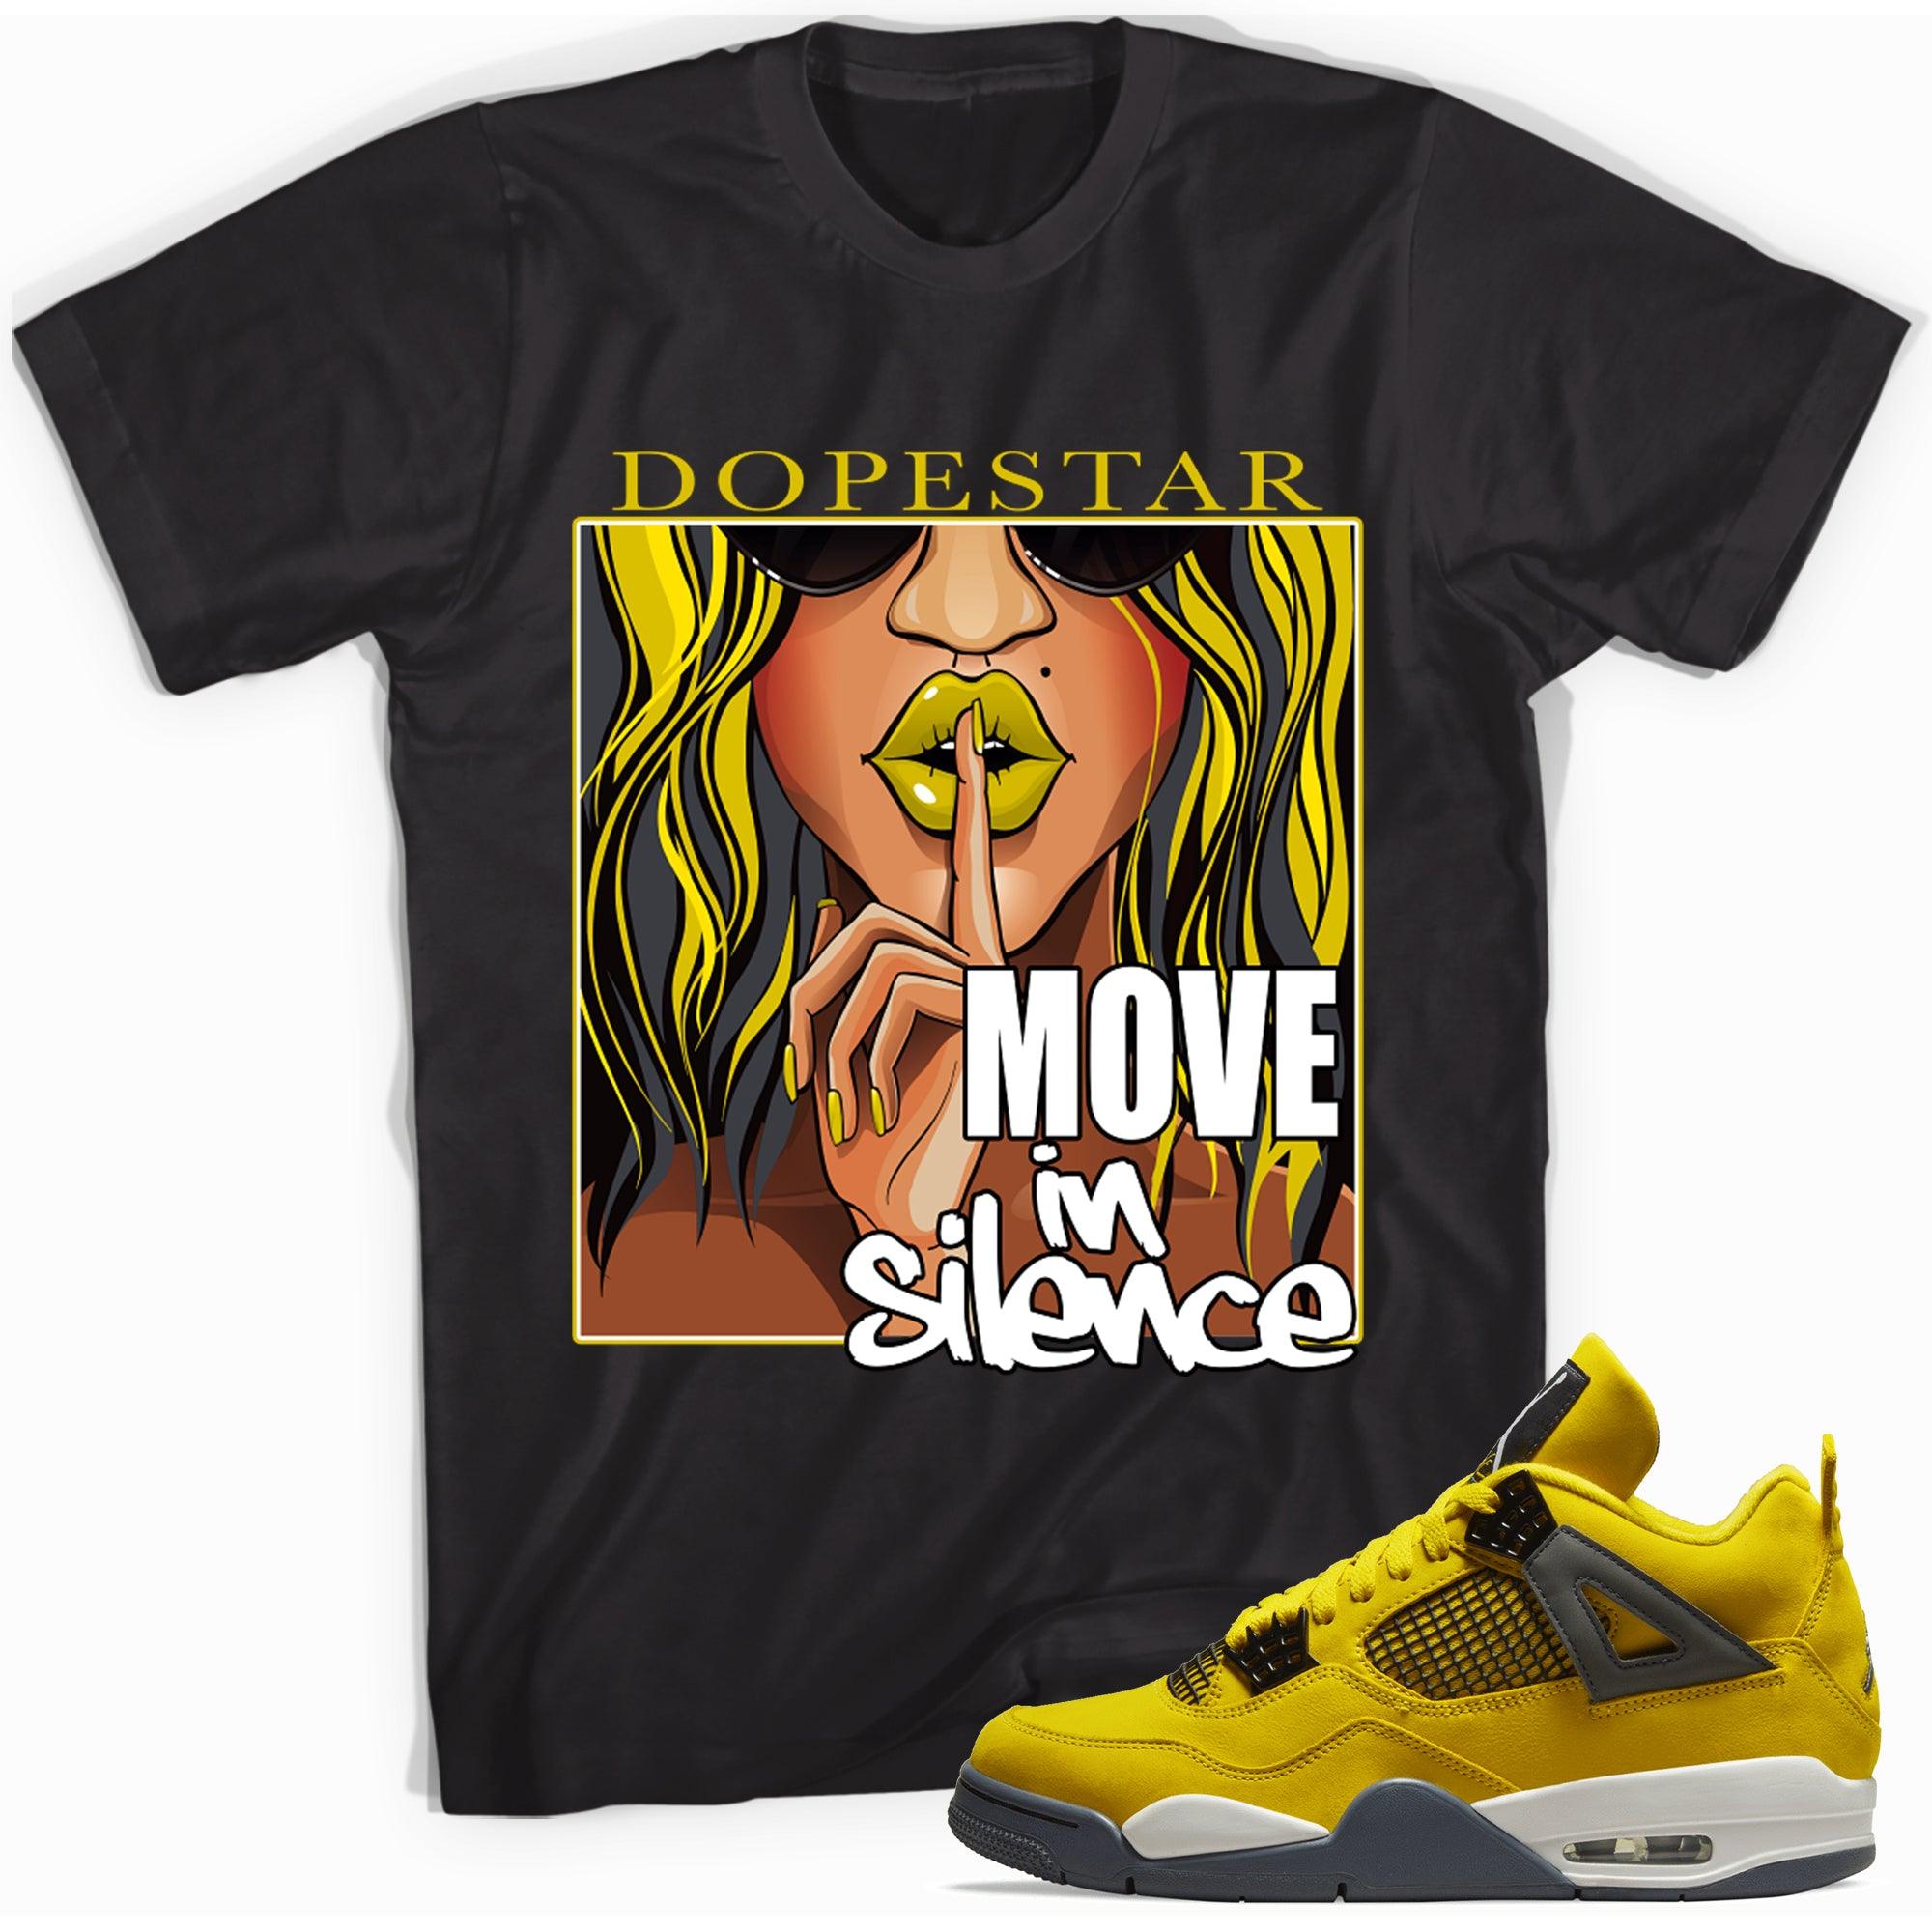 Move In Silence Shirt Air Jordan 4 Retro Lightning photo